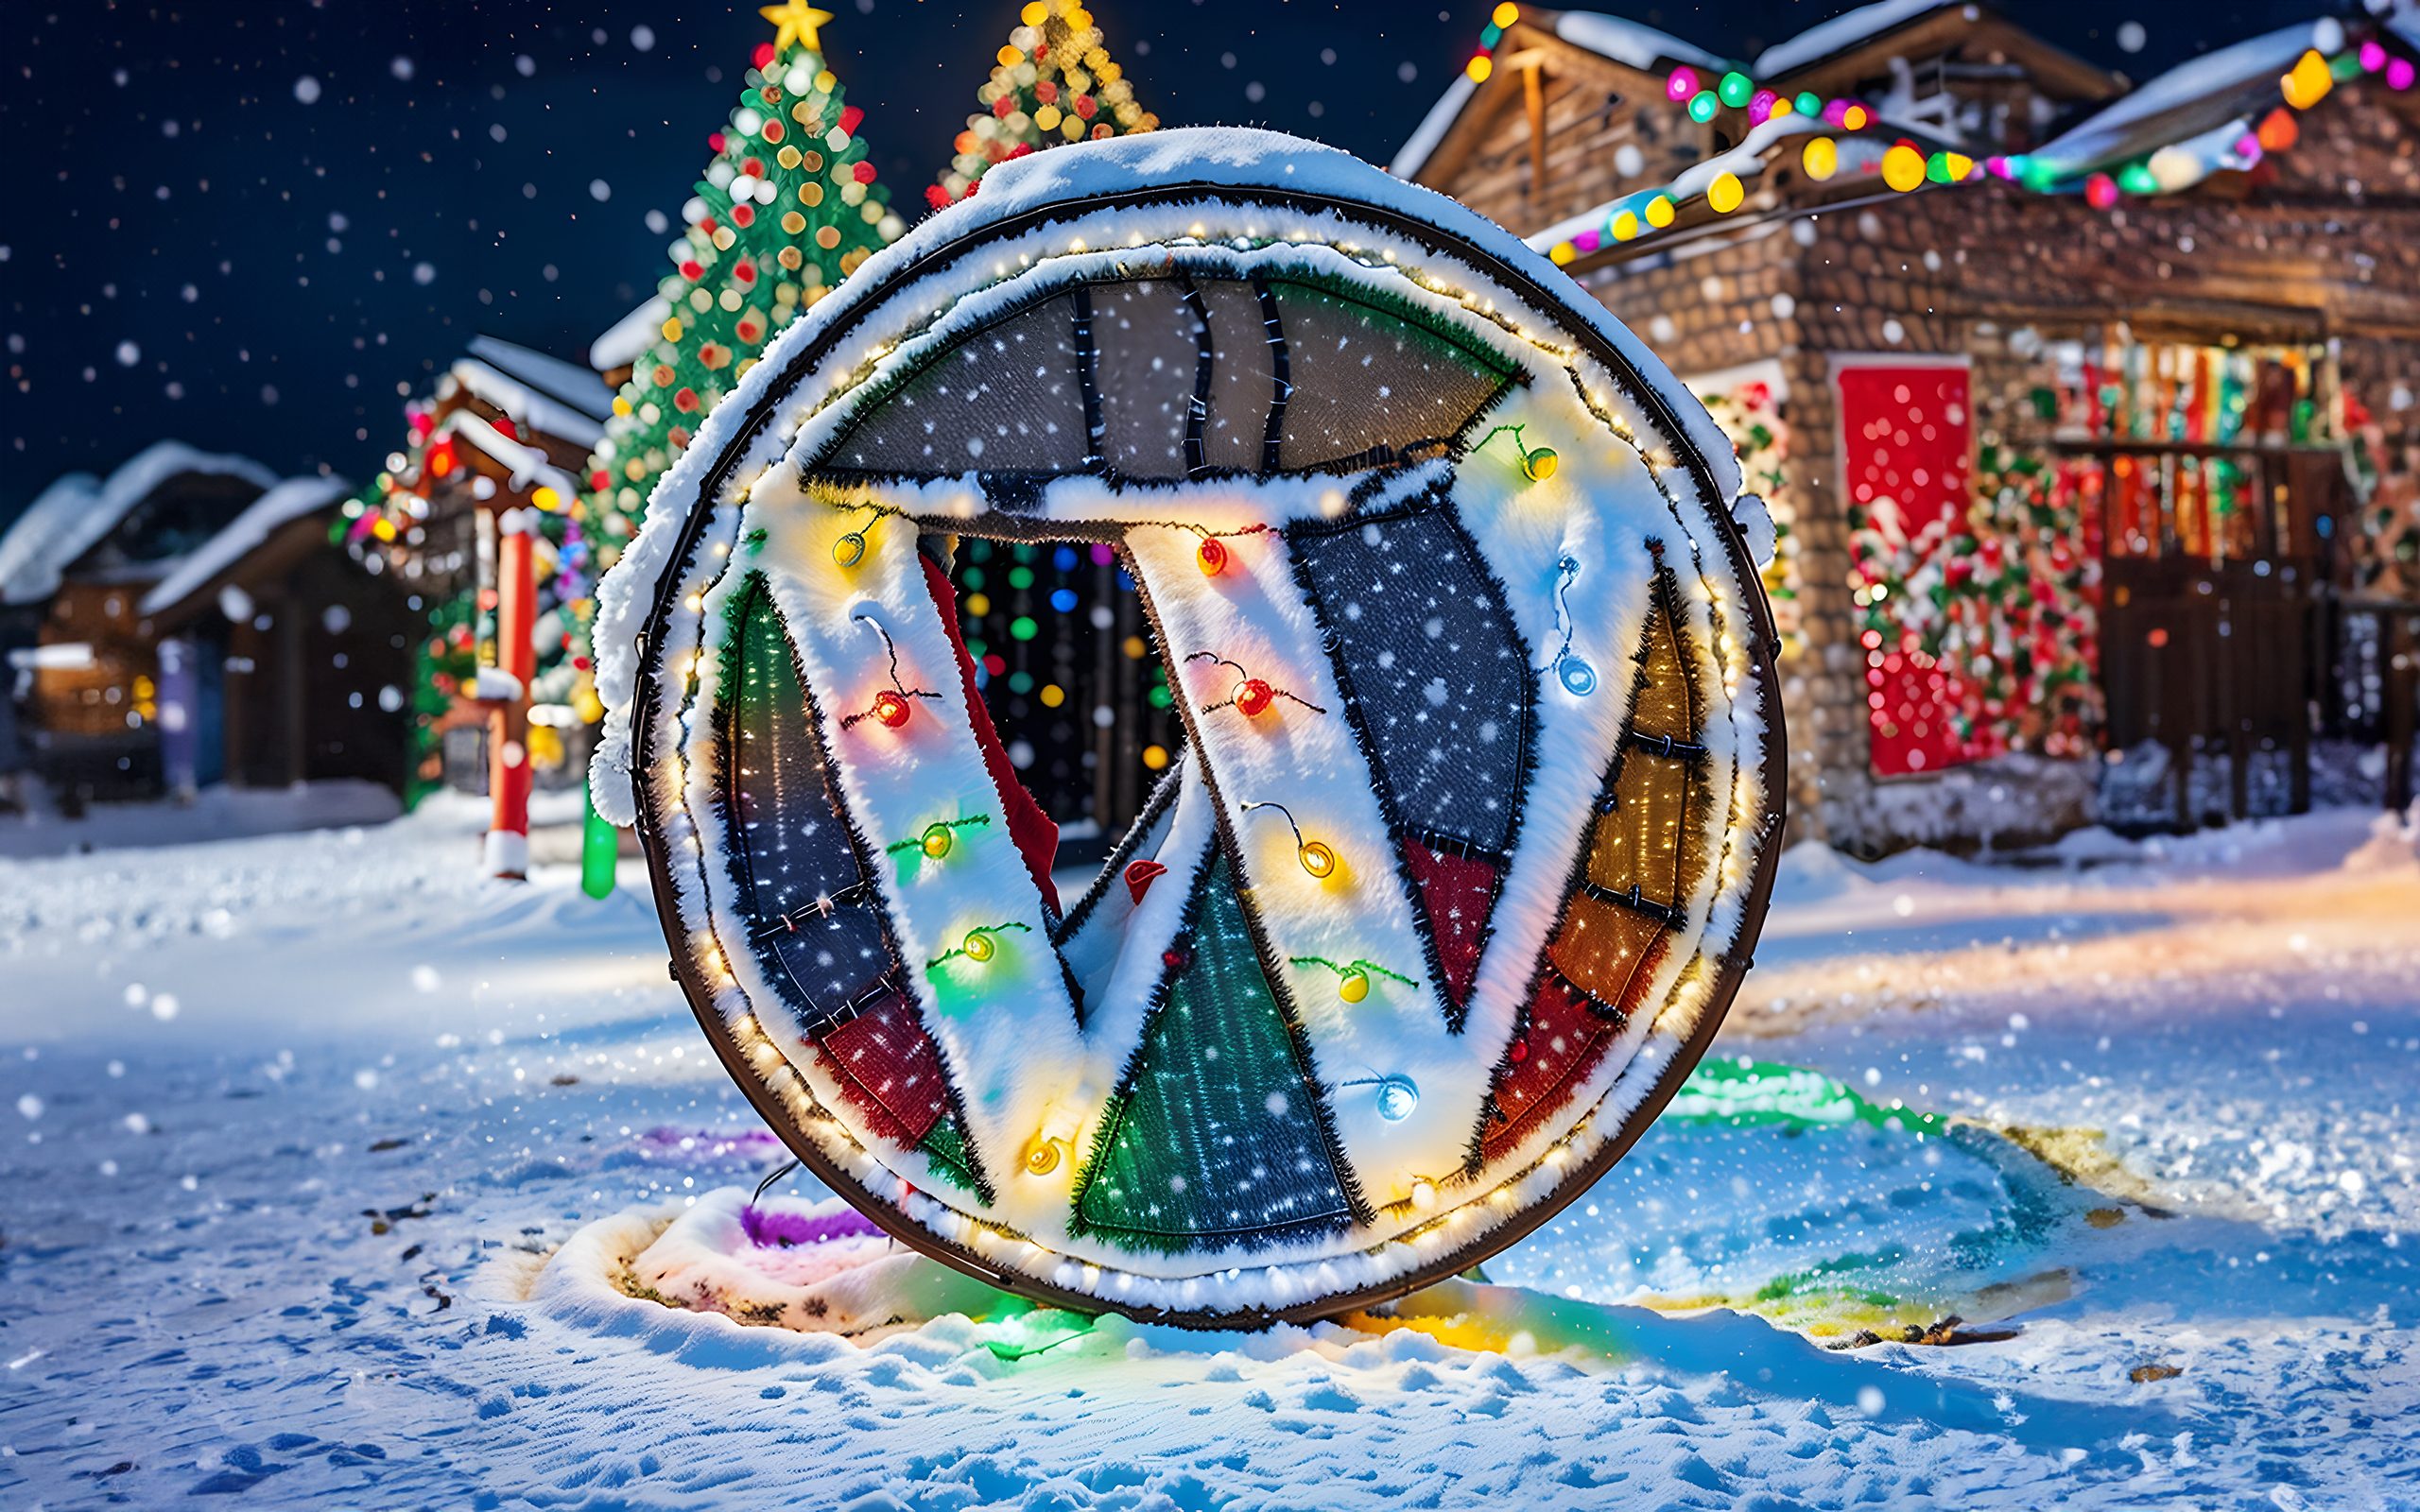 Christmas winter WordPress Wallpaper HD, 4k, 
WordPress logo Christmas market, colourful lights